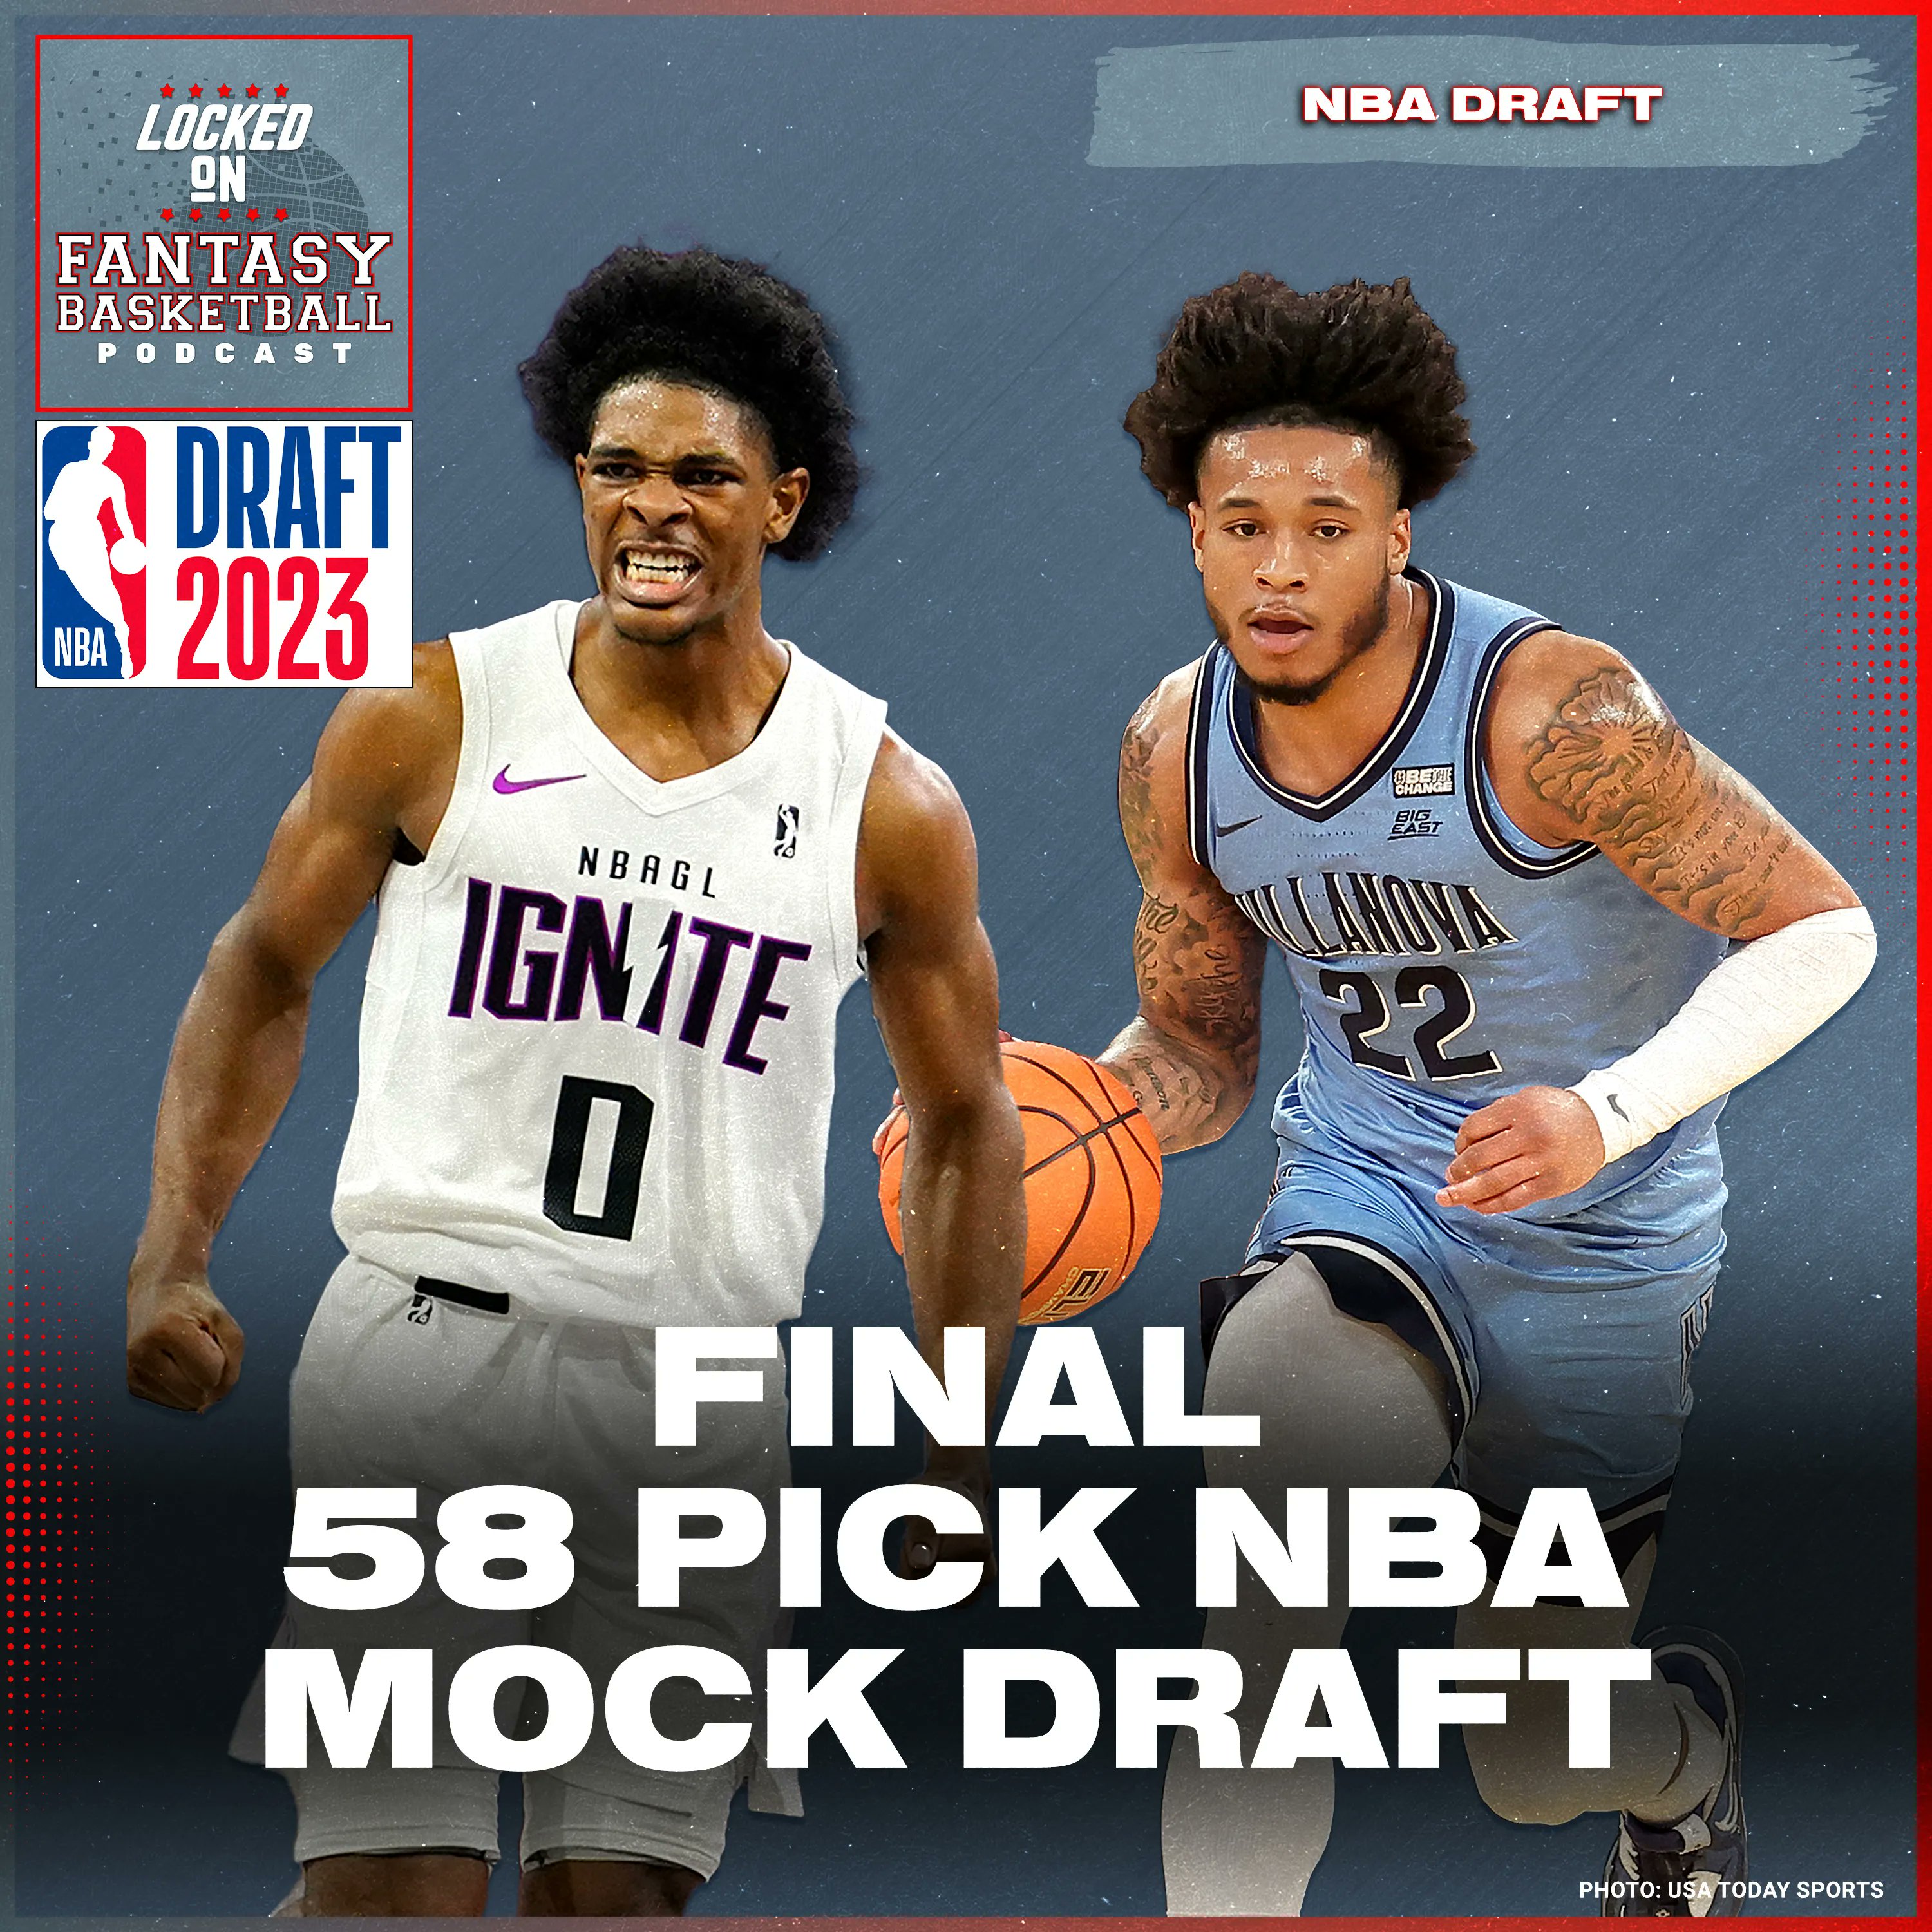 fantasy basketball mock draft